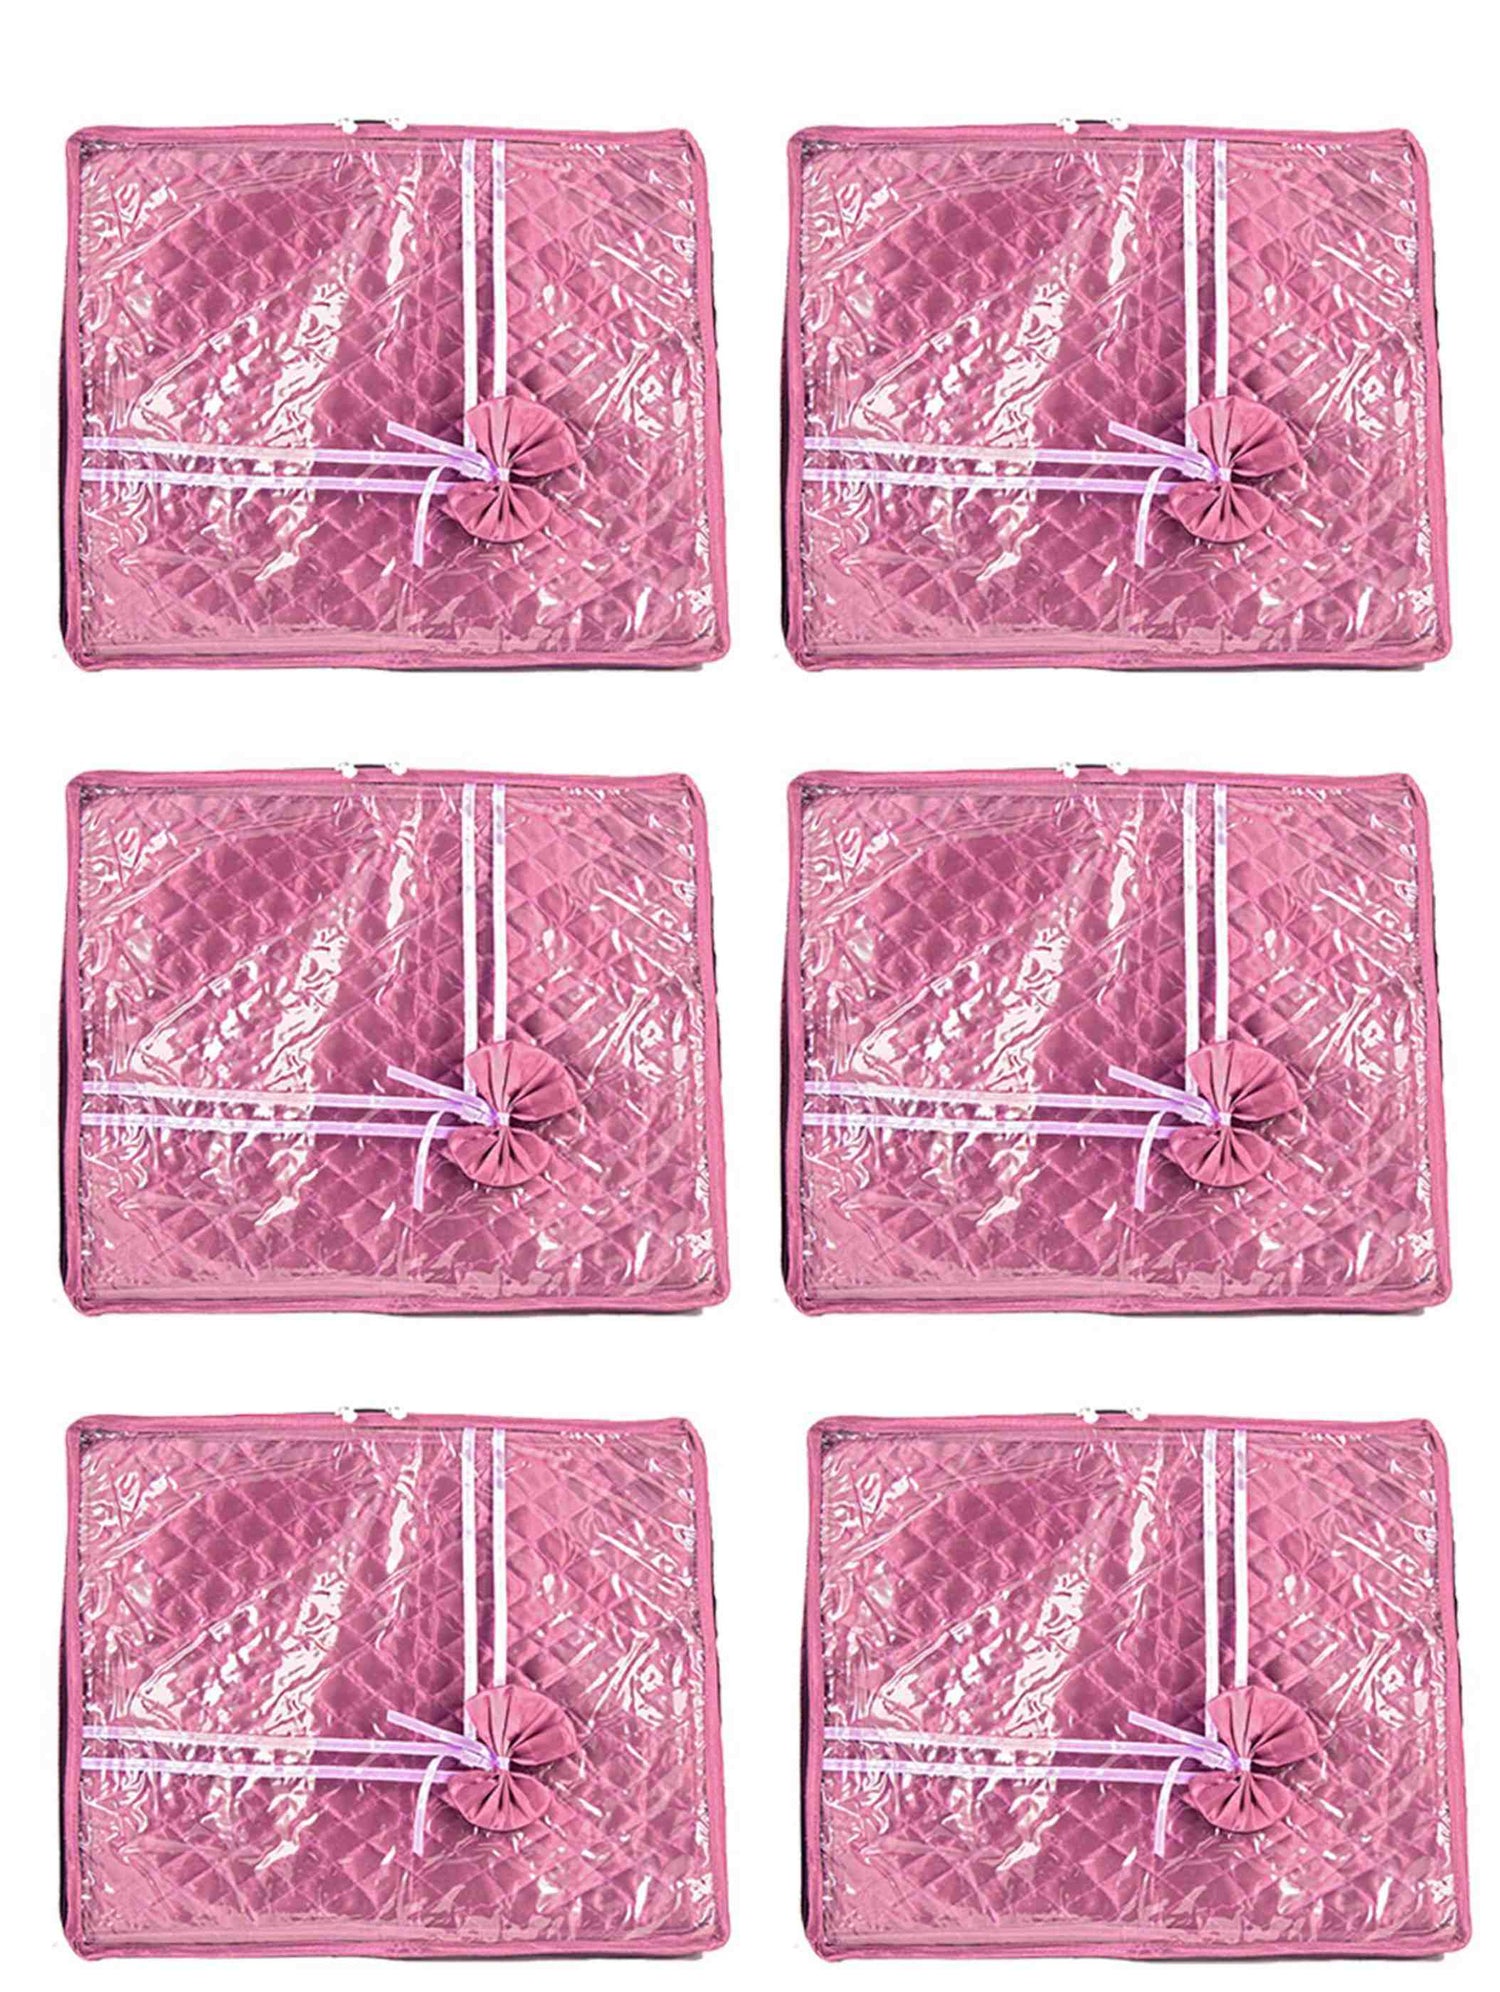 2" small saree cover | wardrobe organizer combo pack of 6 pcs. - FAVISM